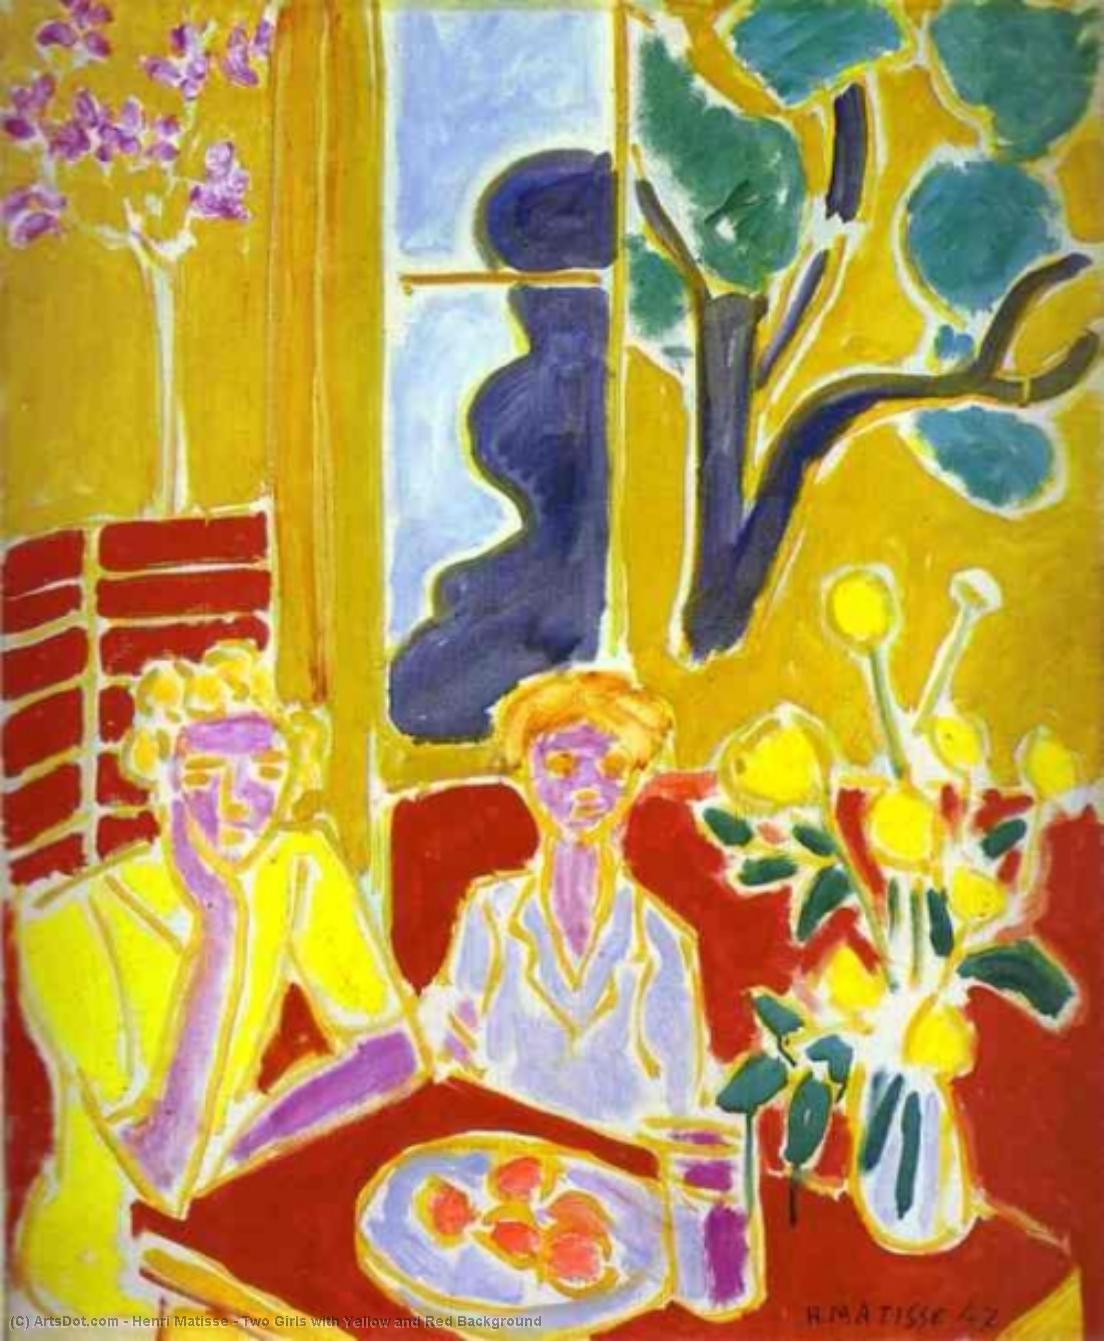 Wikoo.org - موسوعة الفنون الجميلة - اللوحة، العمل الفني Henri Matisse - Two Girls with Yellow and Red Background